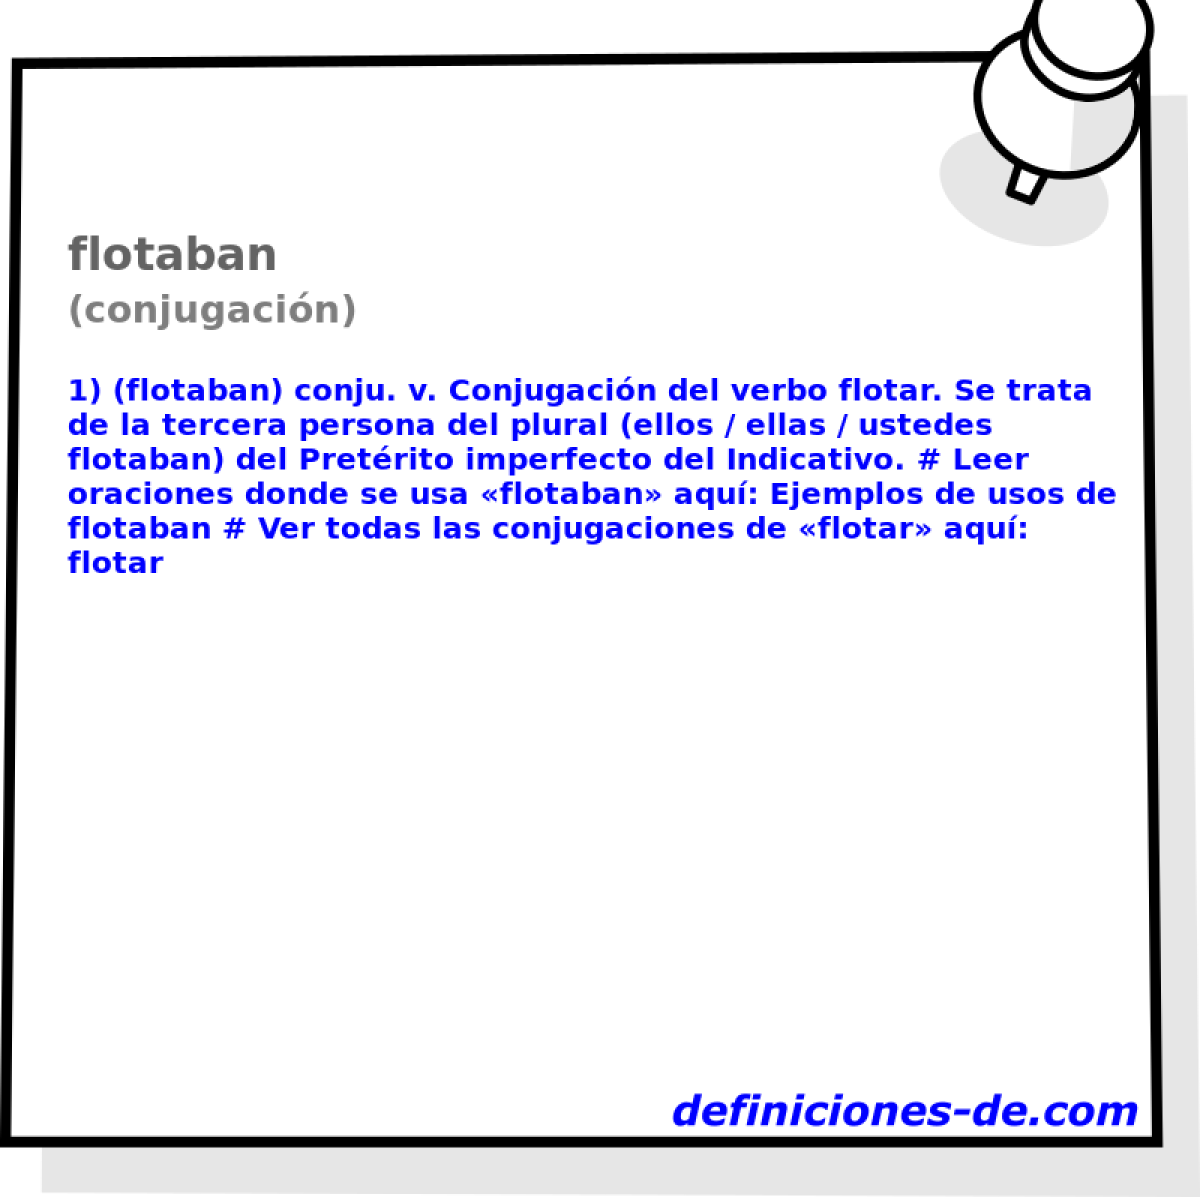 flotaban (conjugacin)